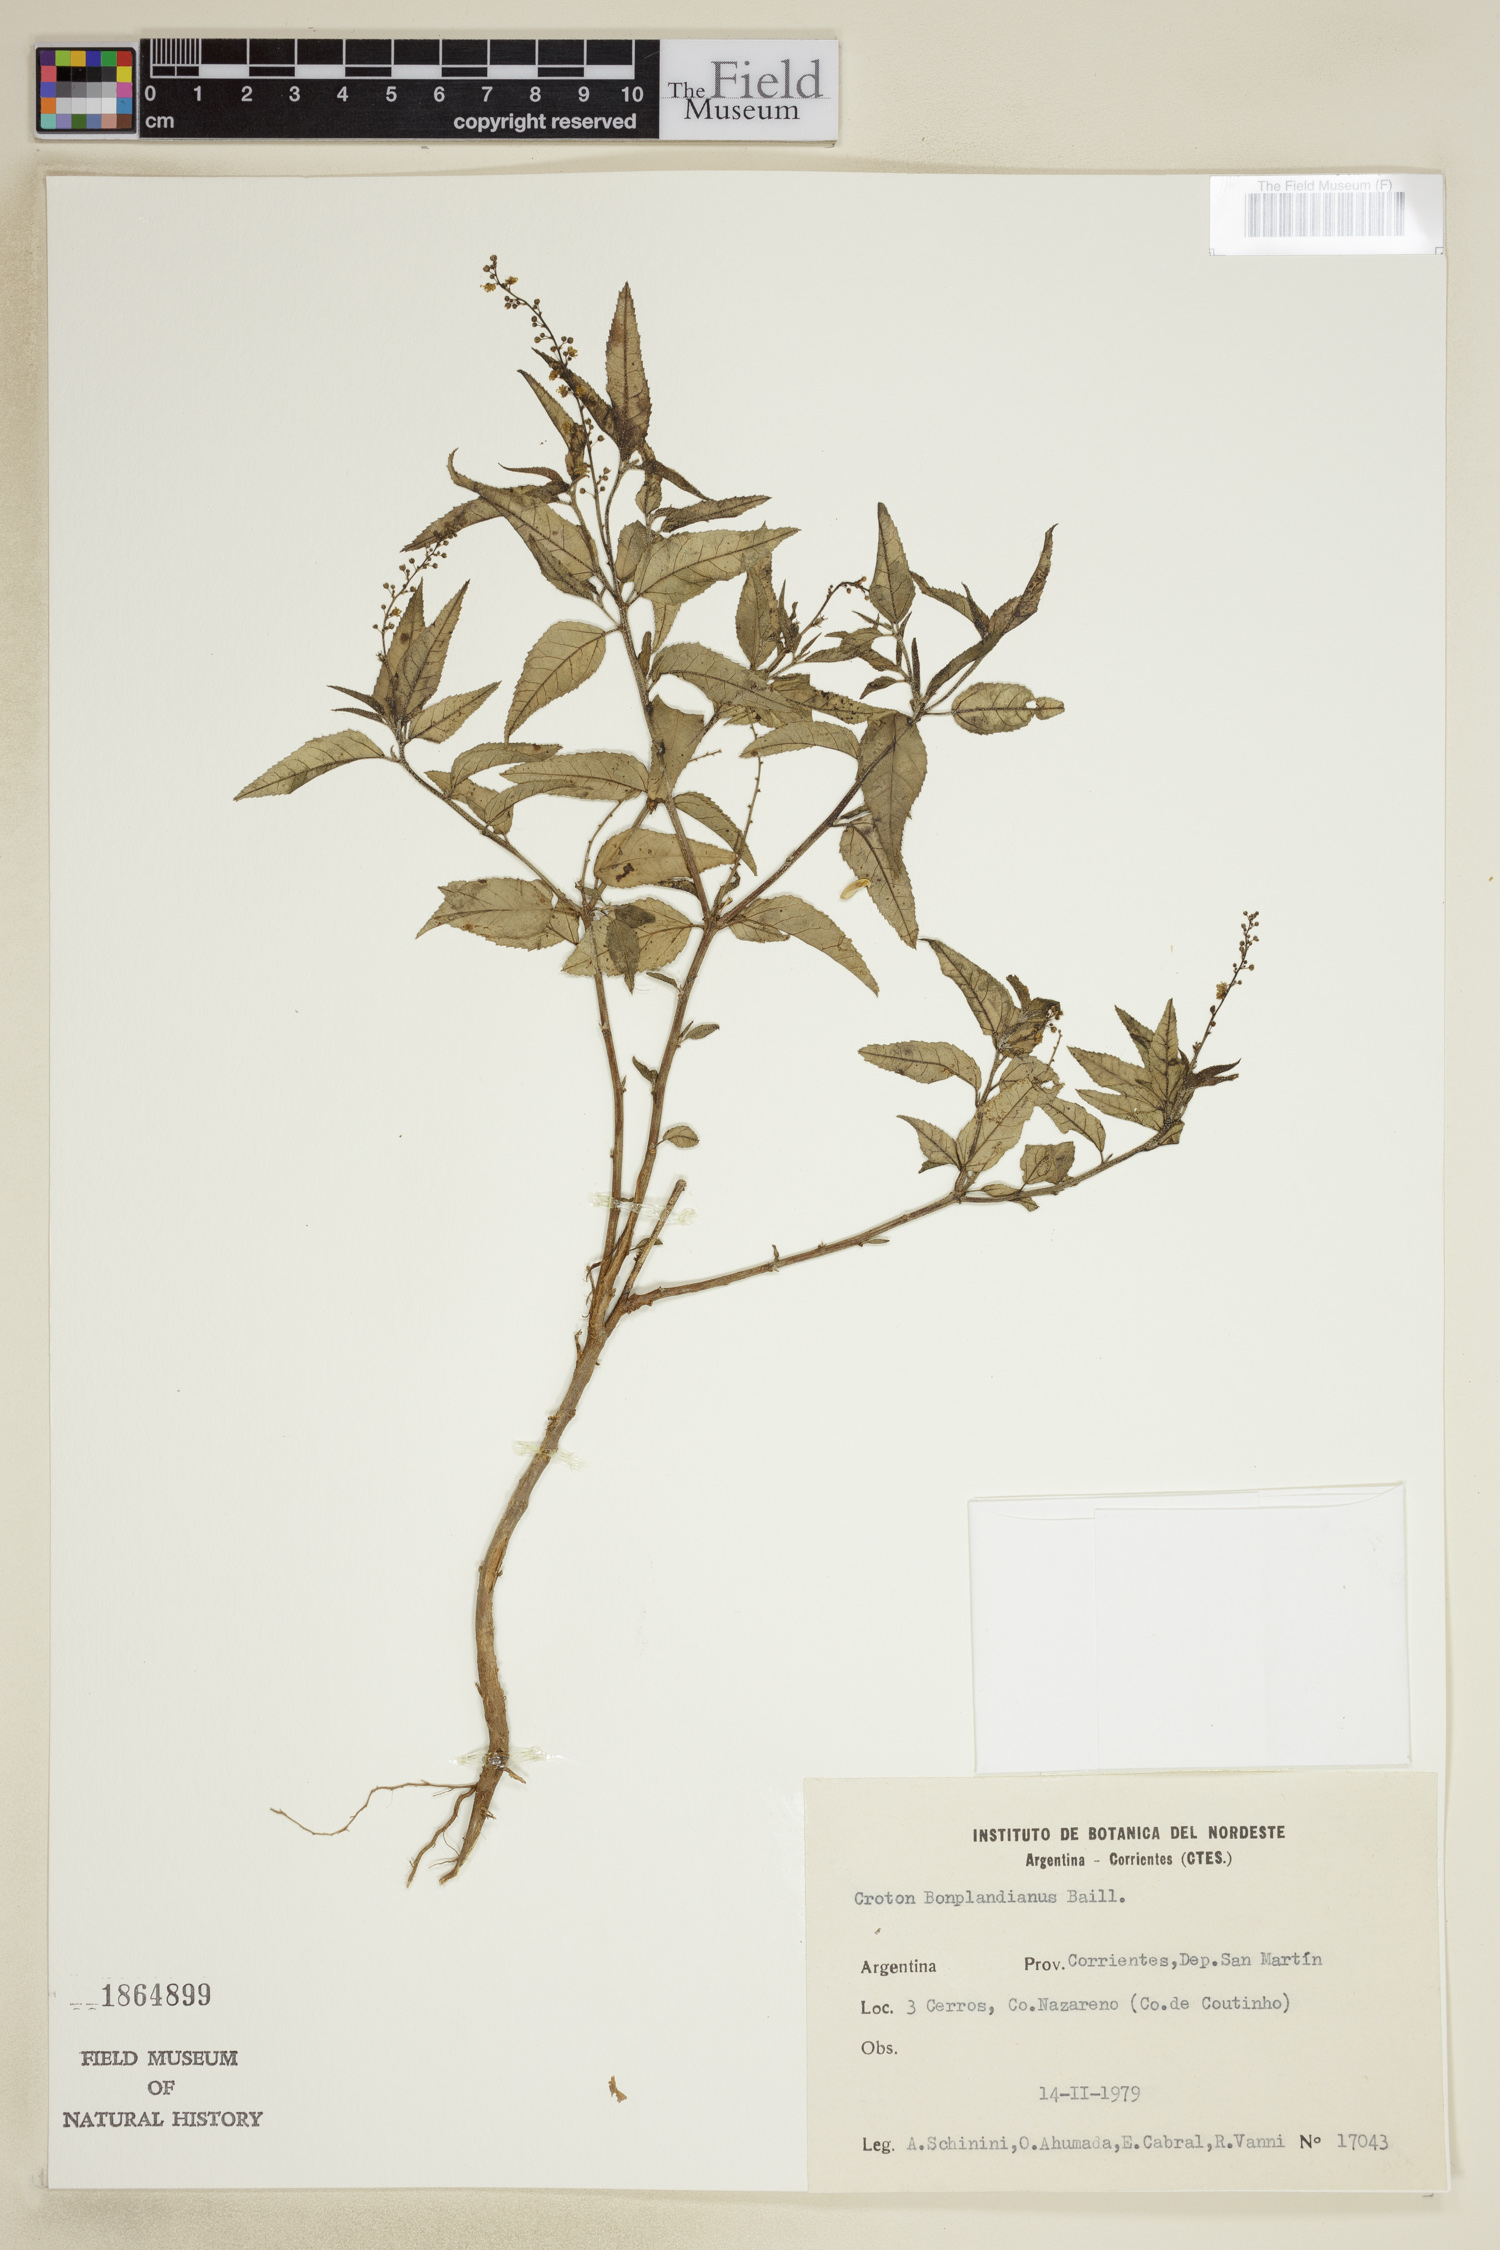 Croton bonplandianus image